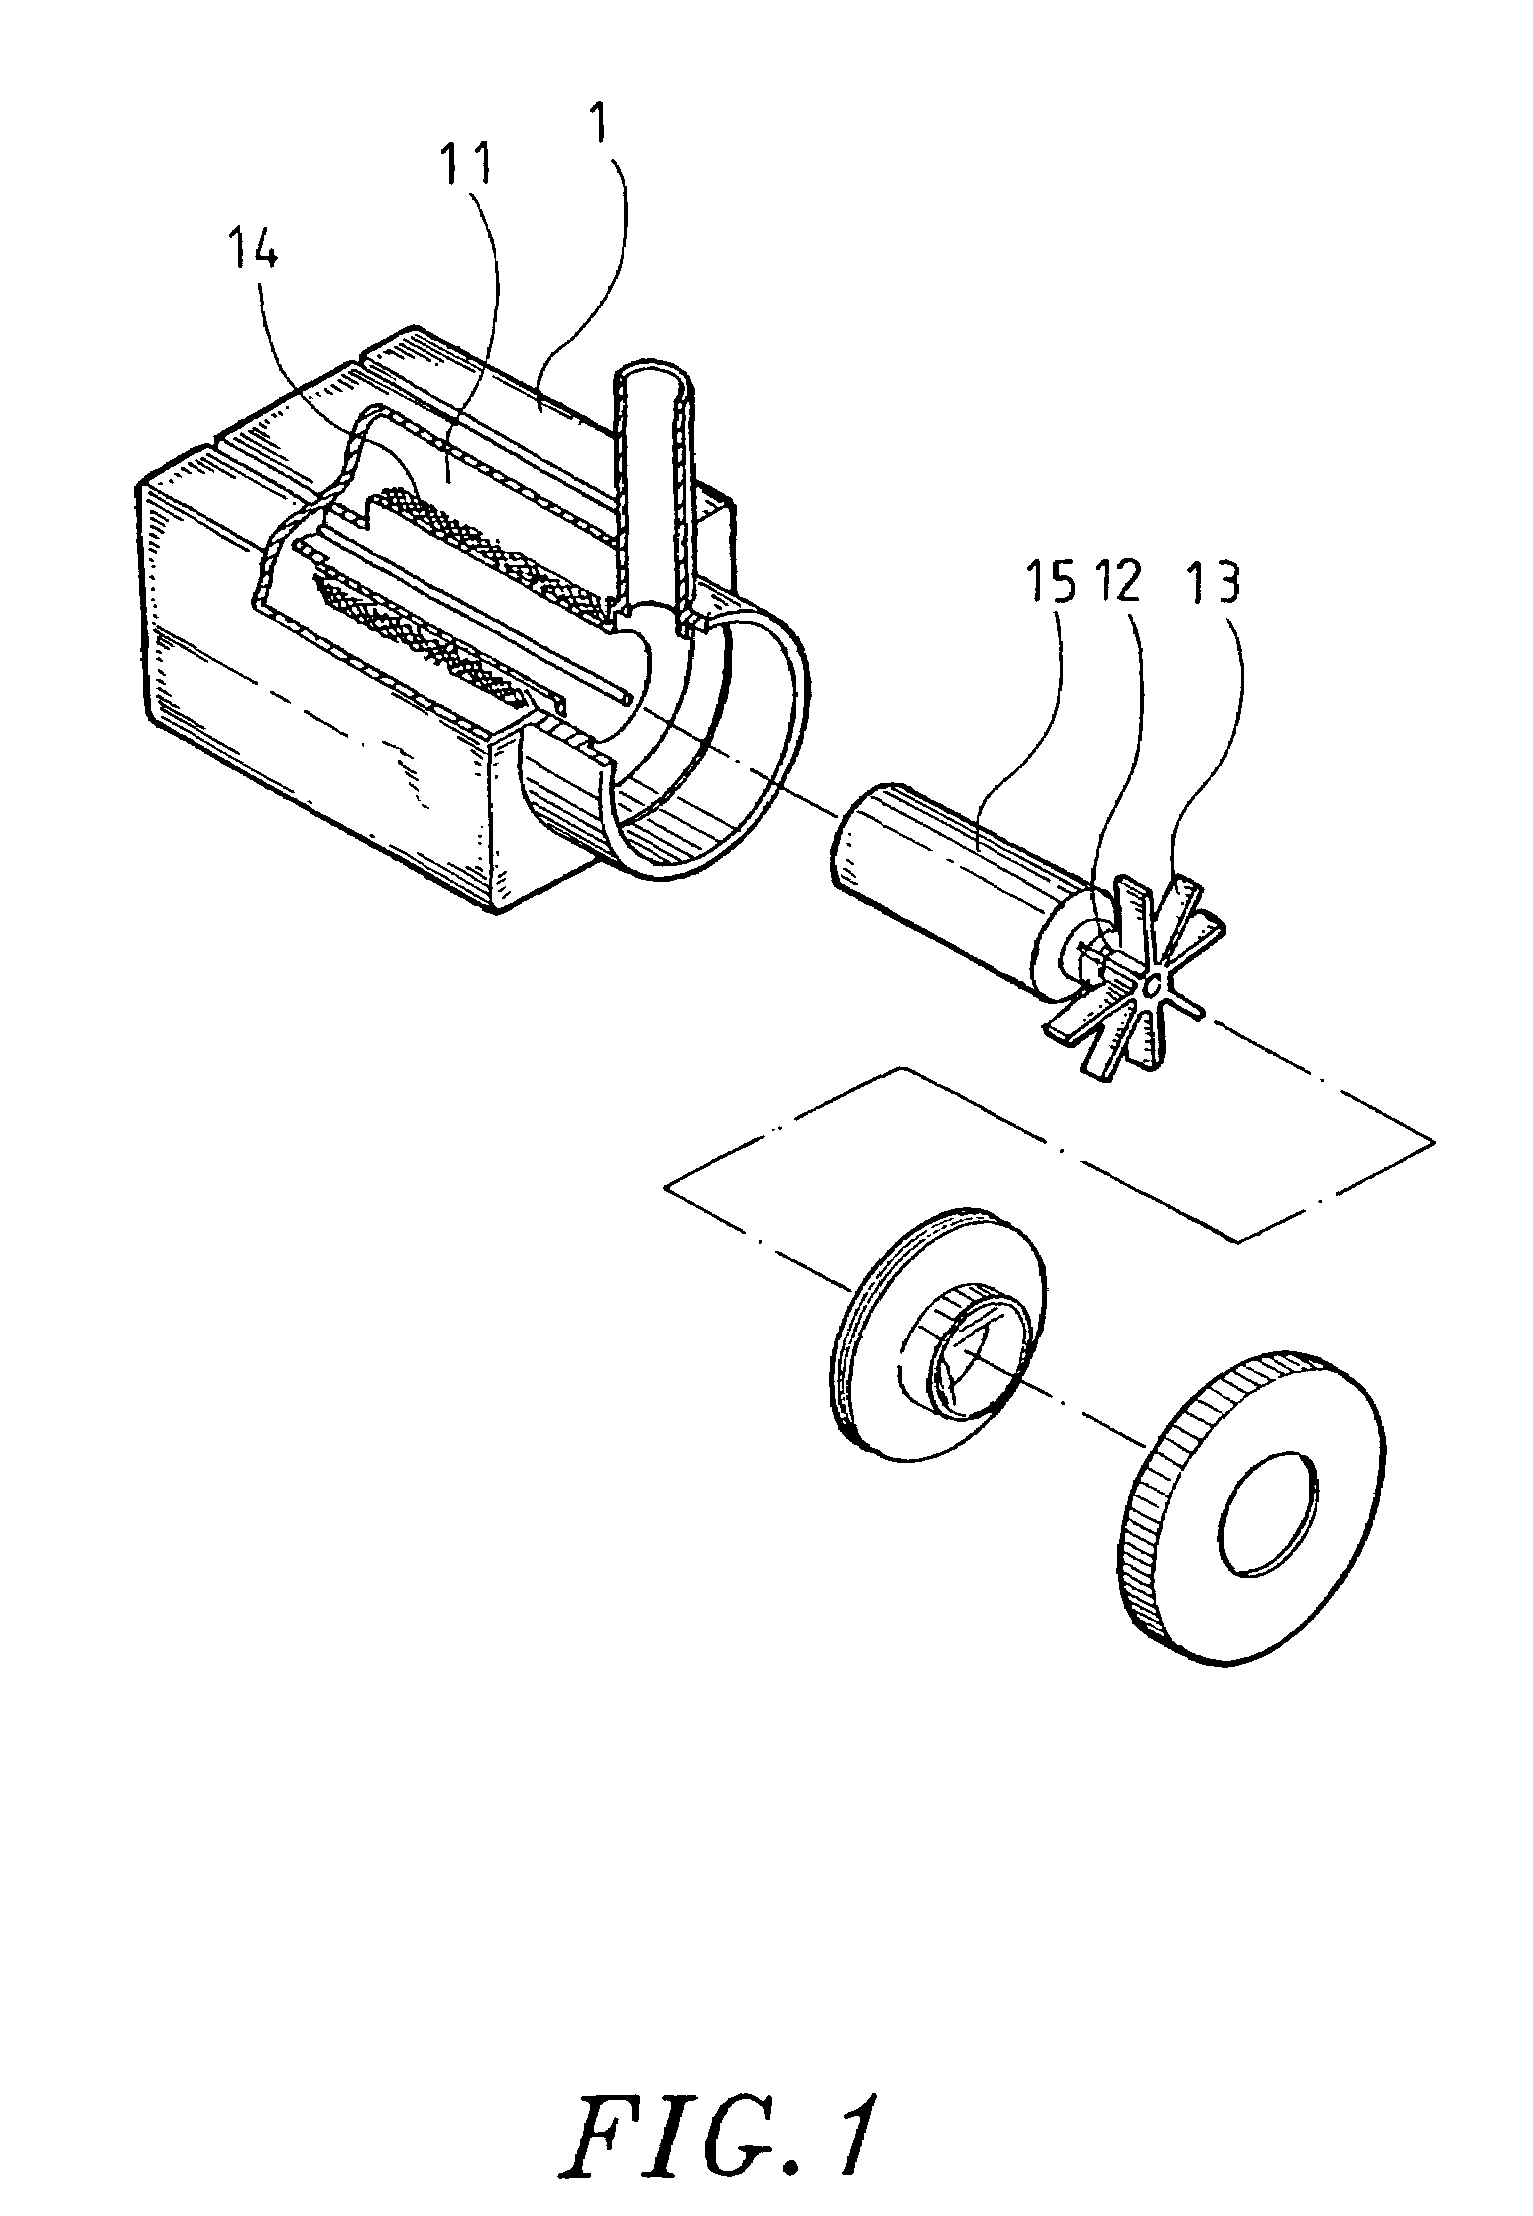 Bi-directional reversible submersible motor